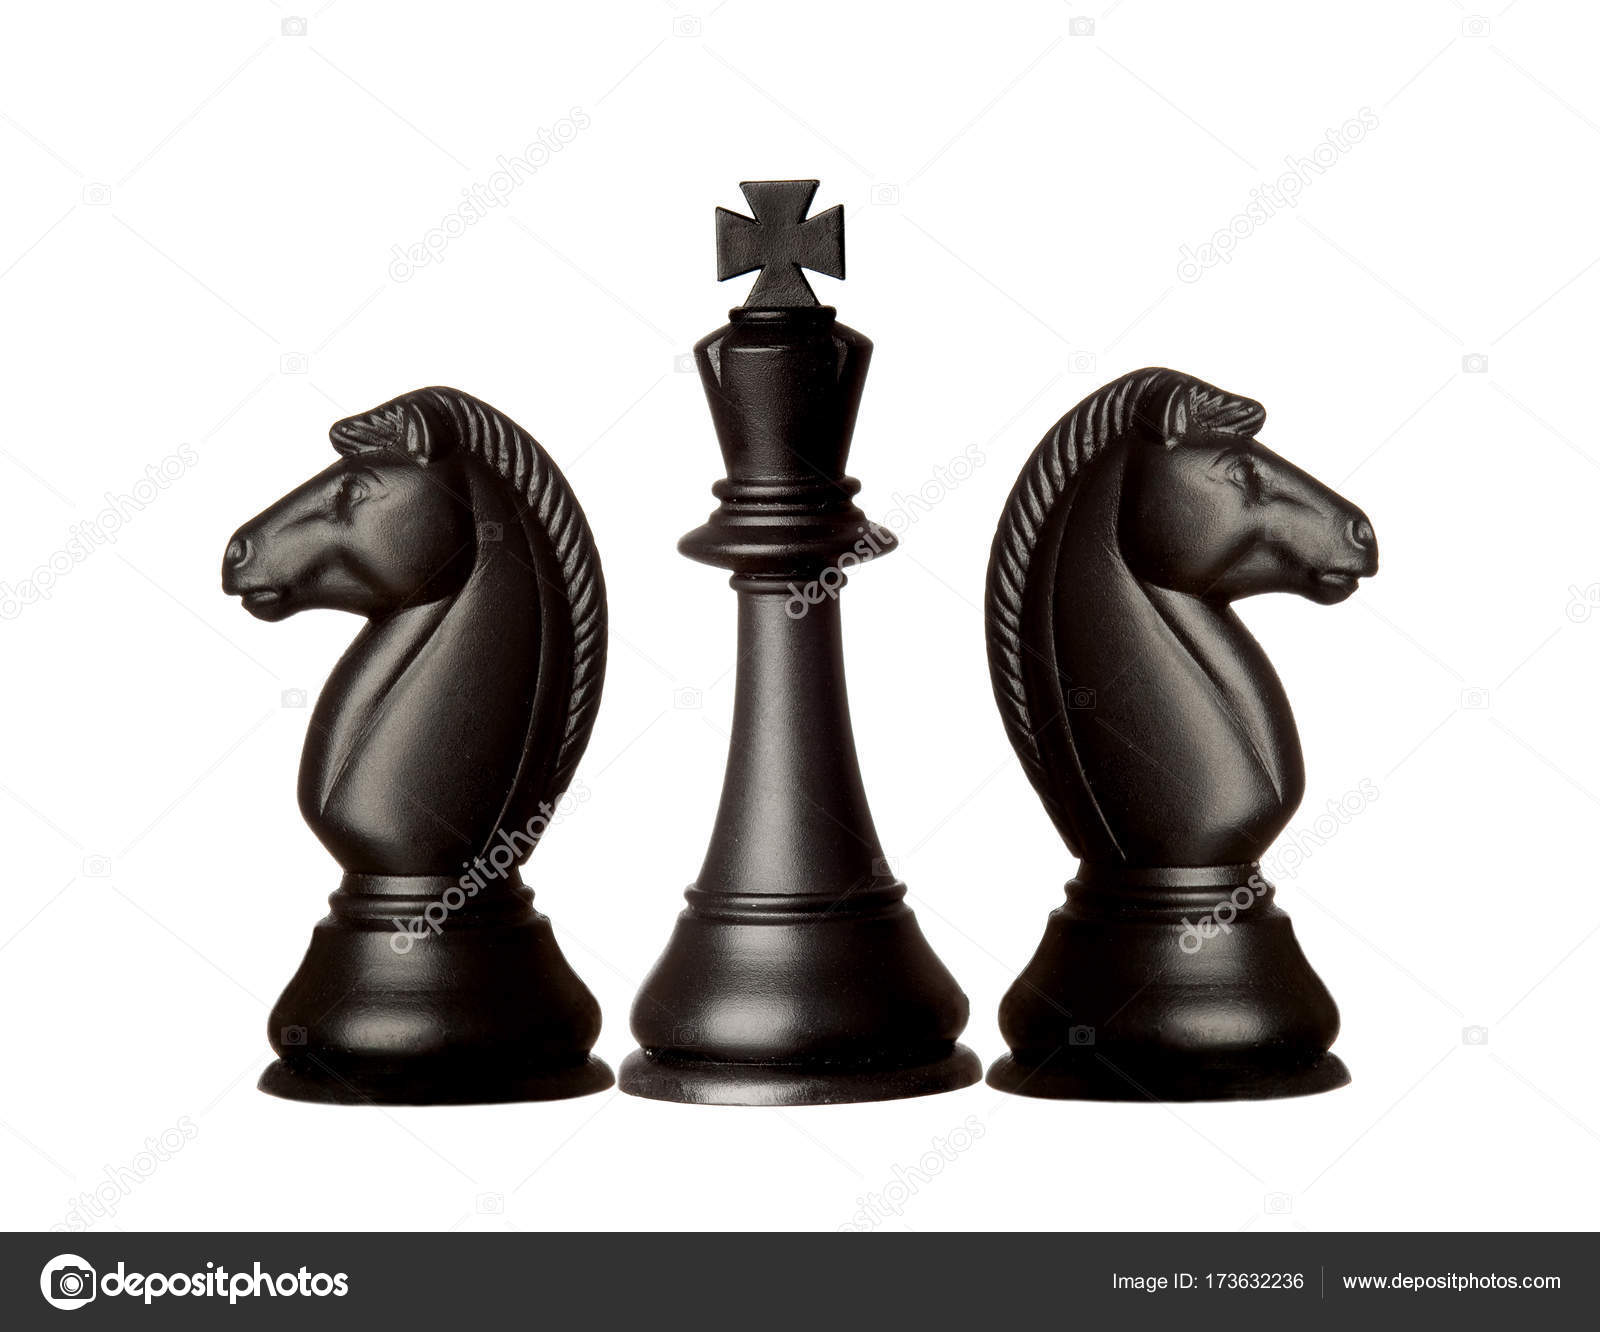 depositphotos_173632236-stock-photo-three-black-chess-pieces.jpg